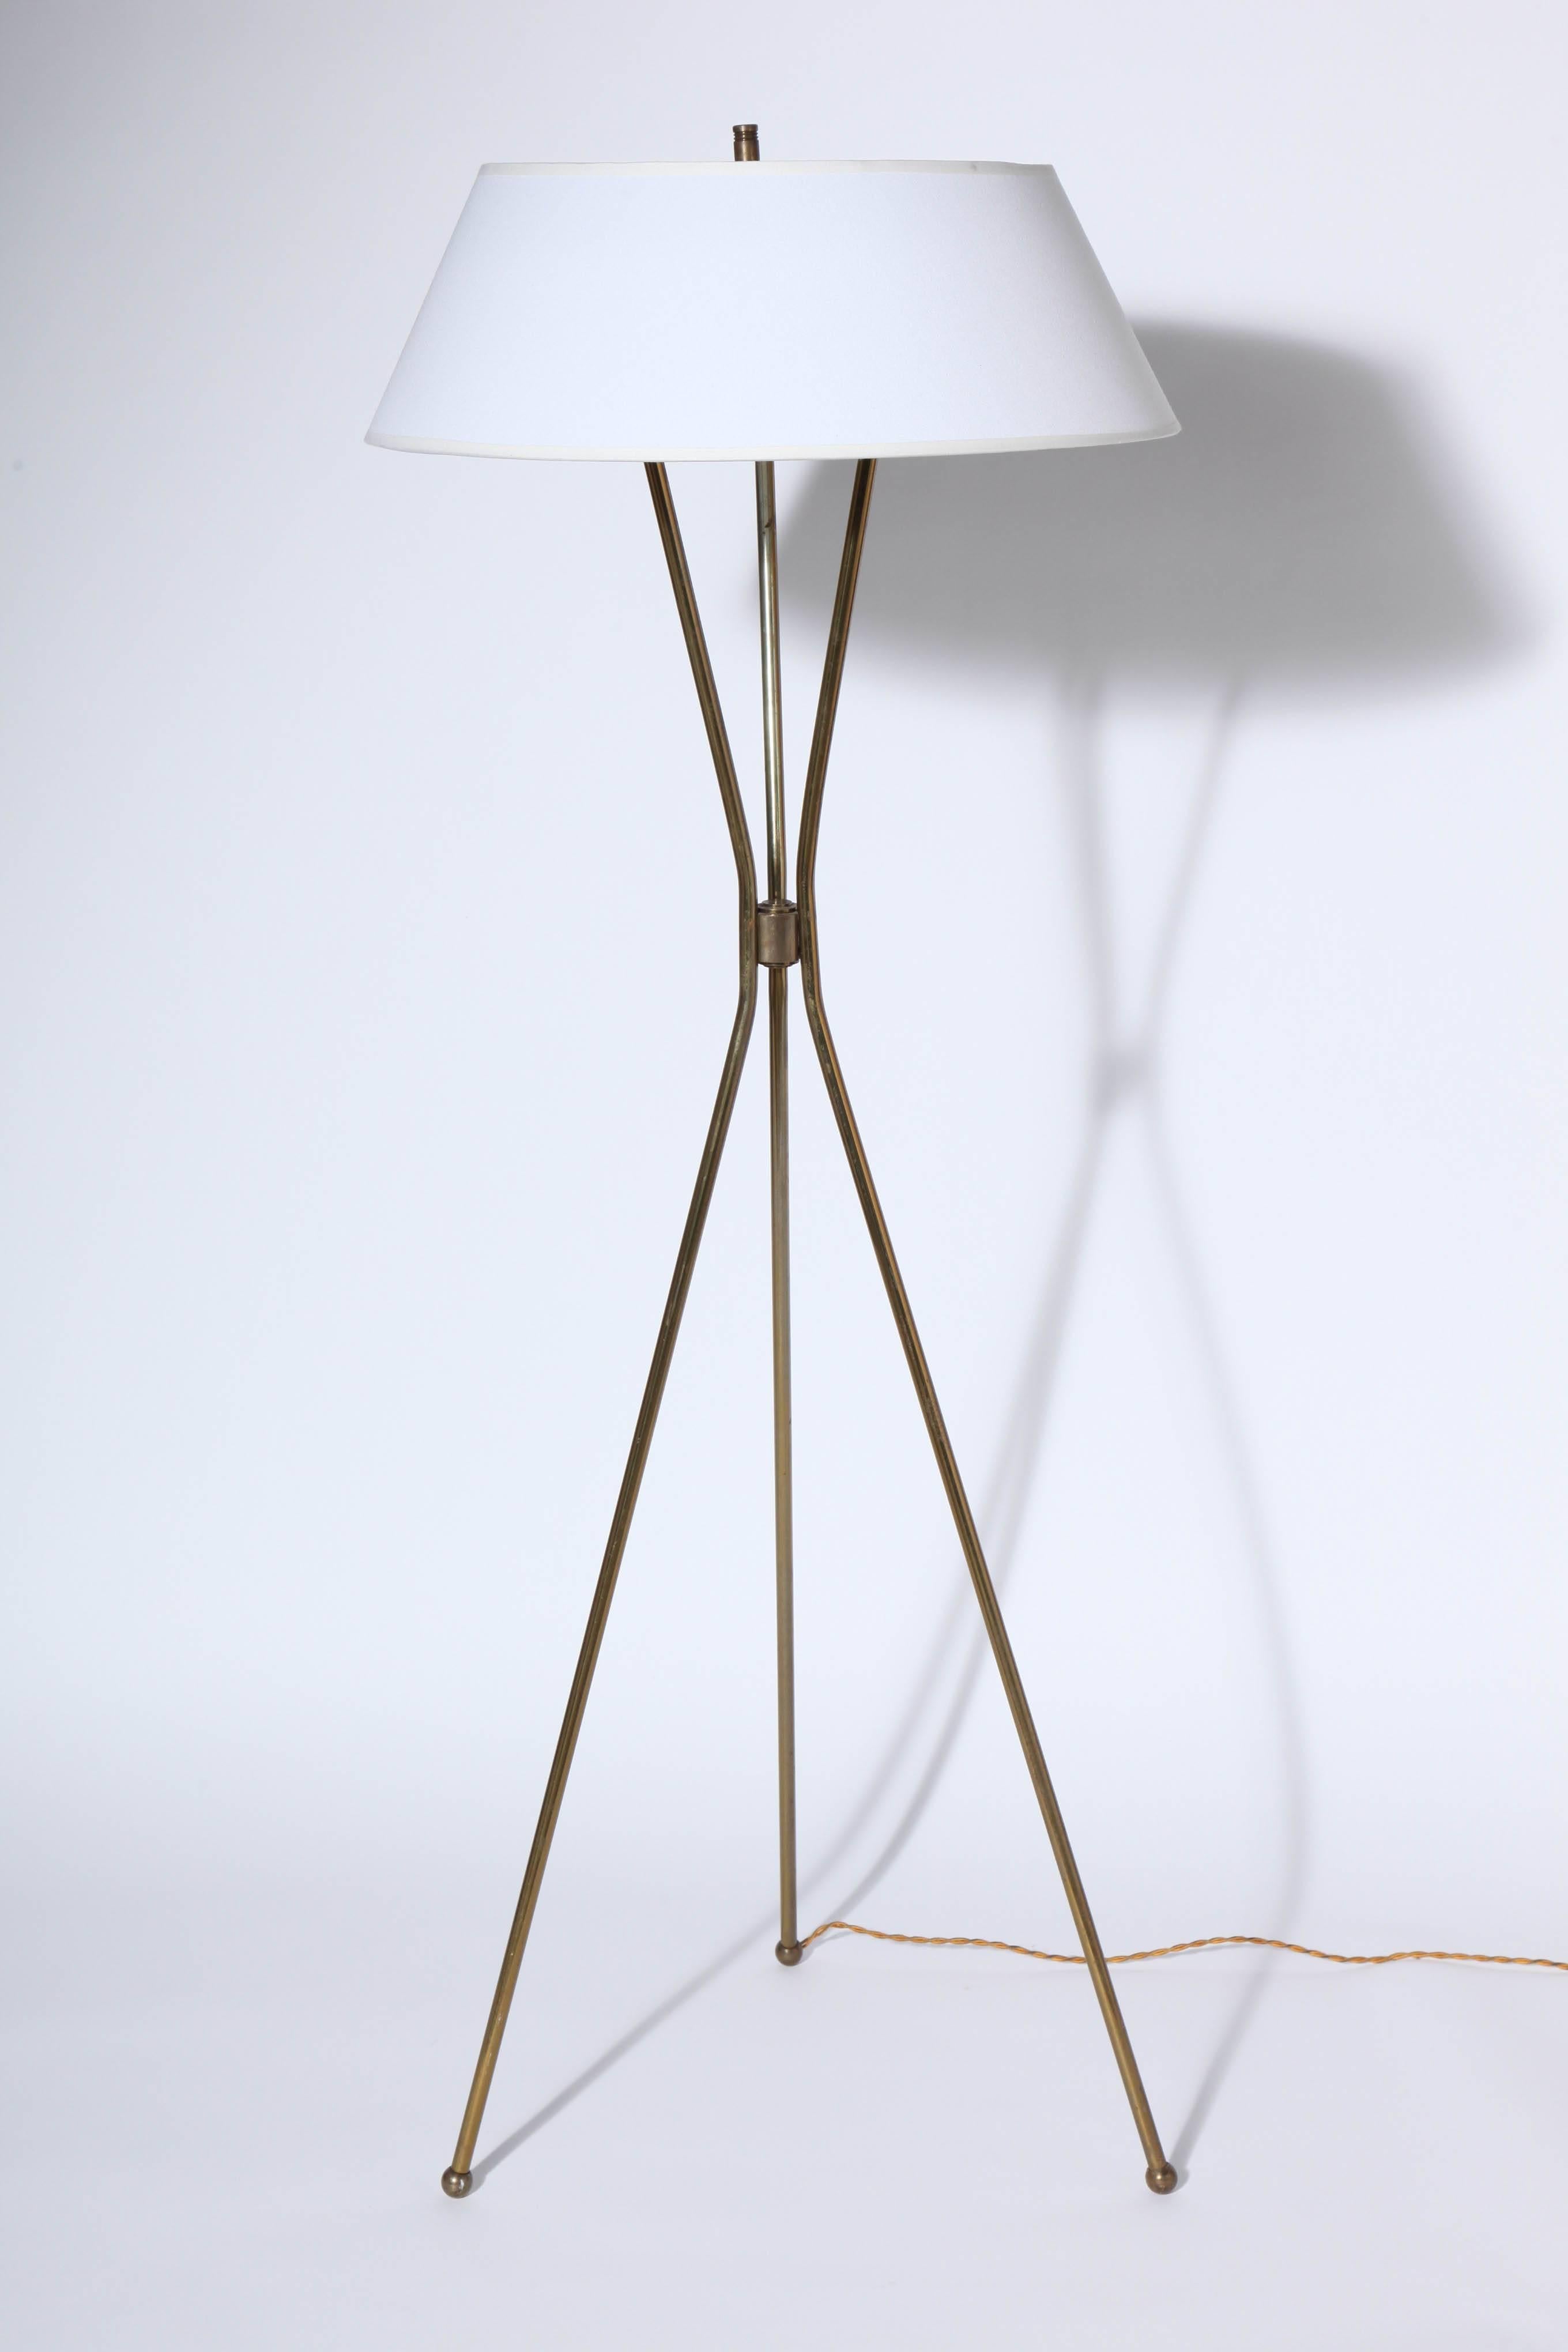 Gerald Thurston for Lightolier Brass Tripod Floor Lamp, 1950s  In Good Condition For Sale In Bainbridge, NY